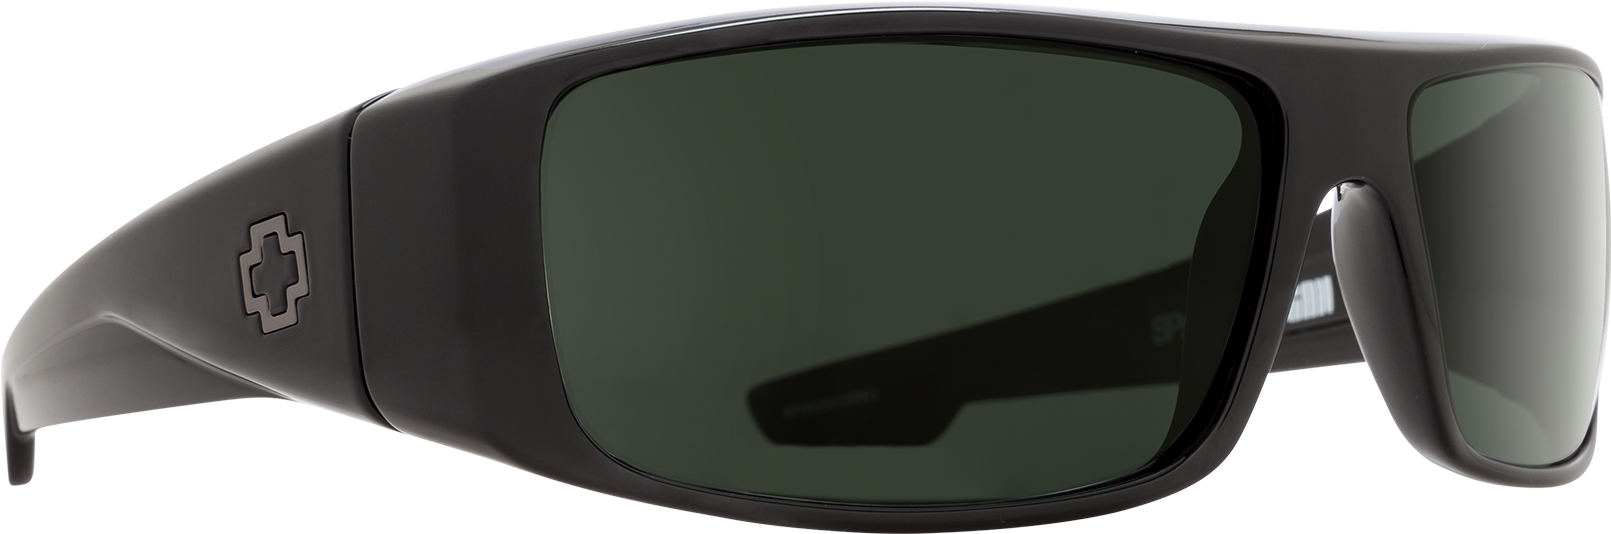 A Close Up Of A Black Sunglasses